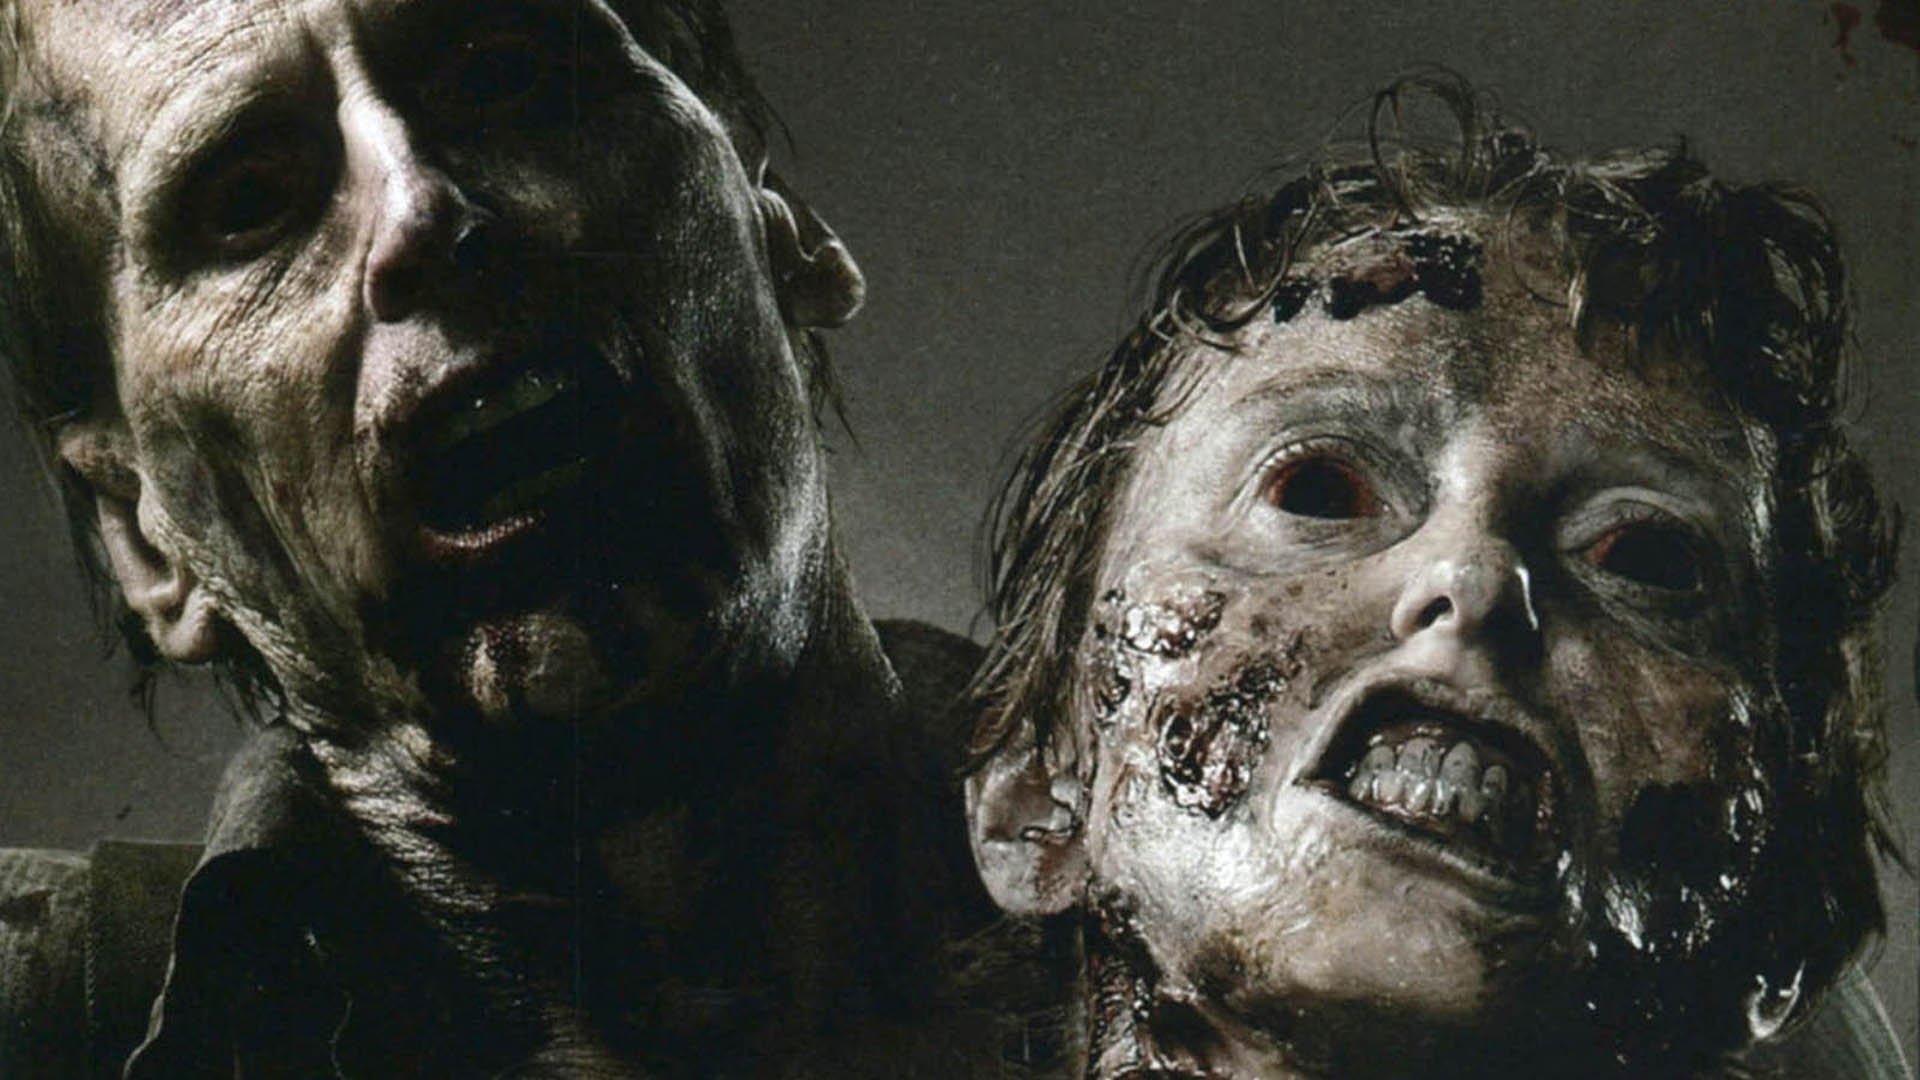 The Walking Dead Dark Horror Zombie Series Apocalyptic Drama Thriller